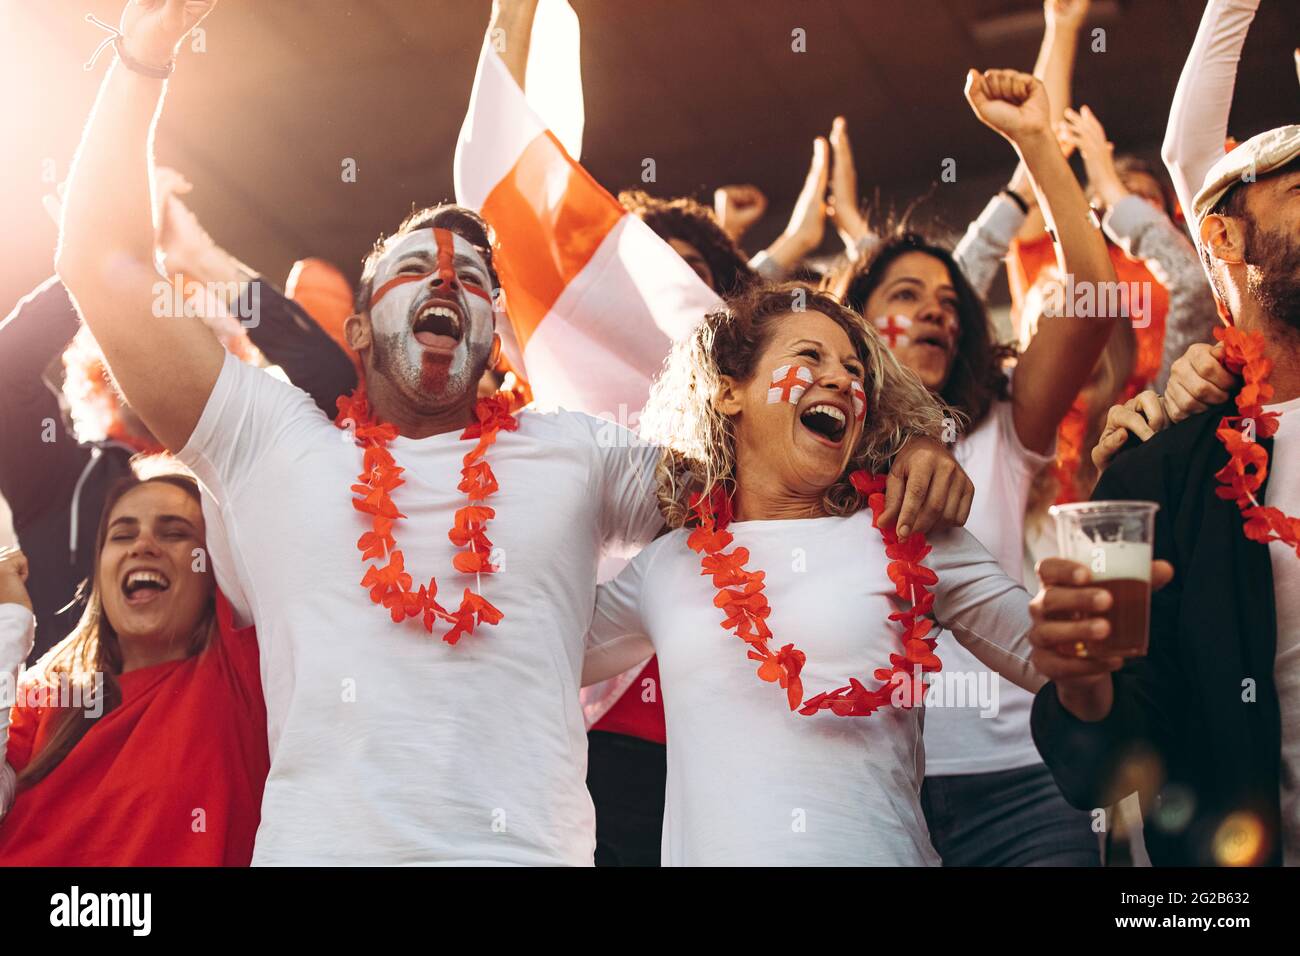 English spectators enjoying after a championship win at stadium. Cheering soccer fans at soccer championship game. Stock Photo